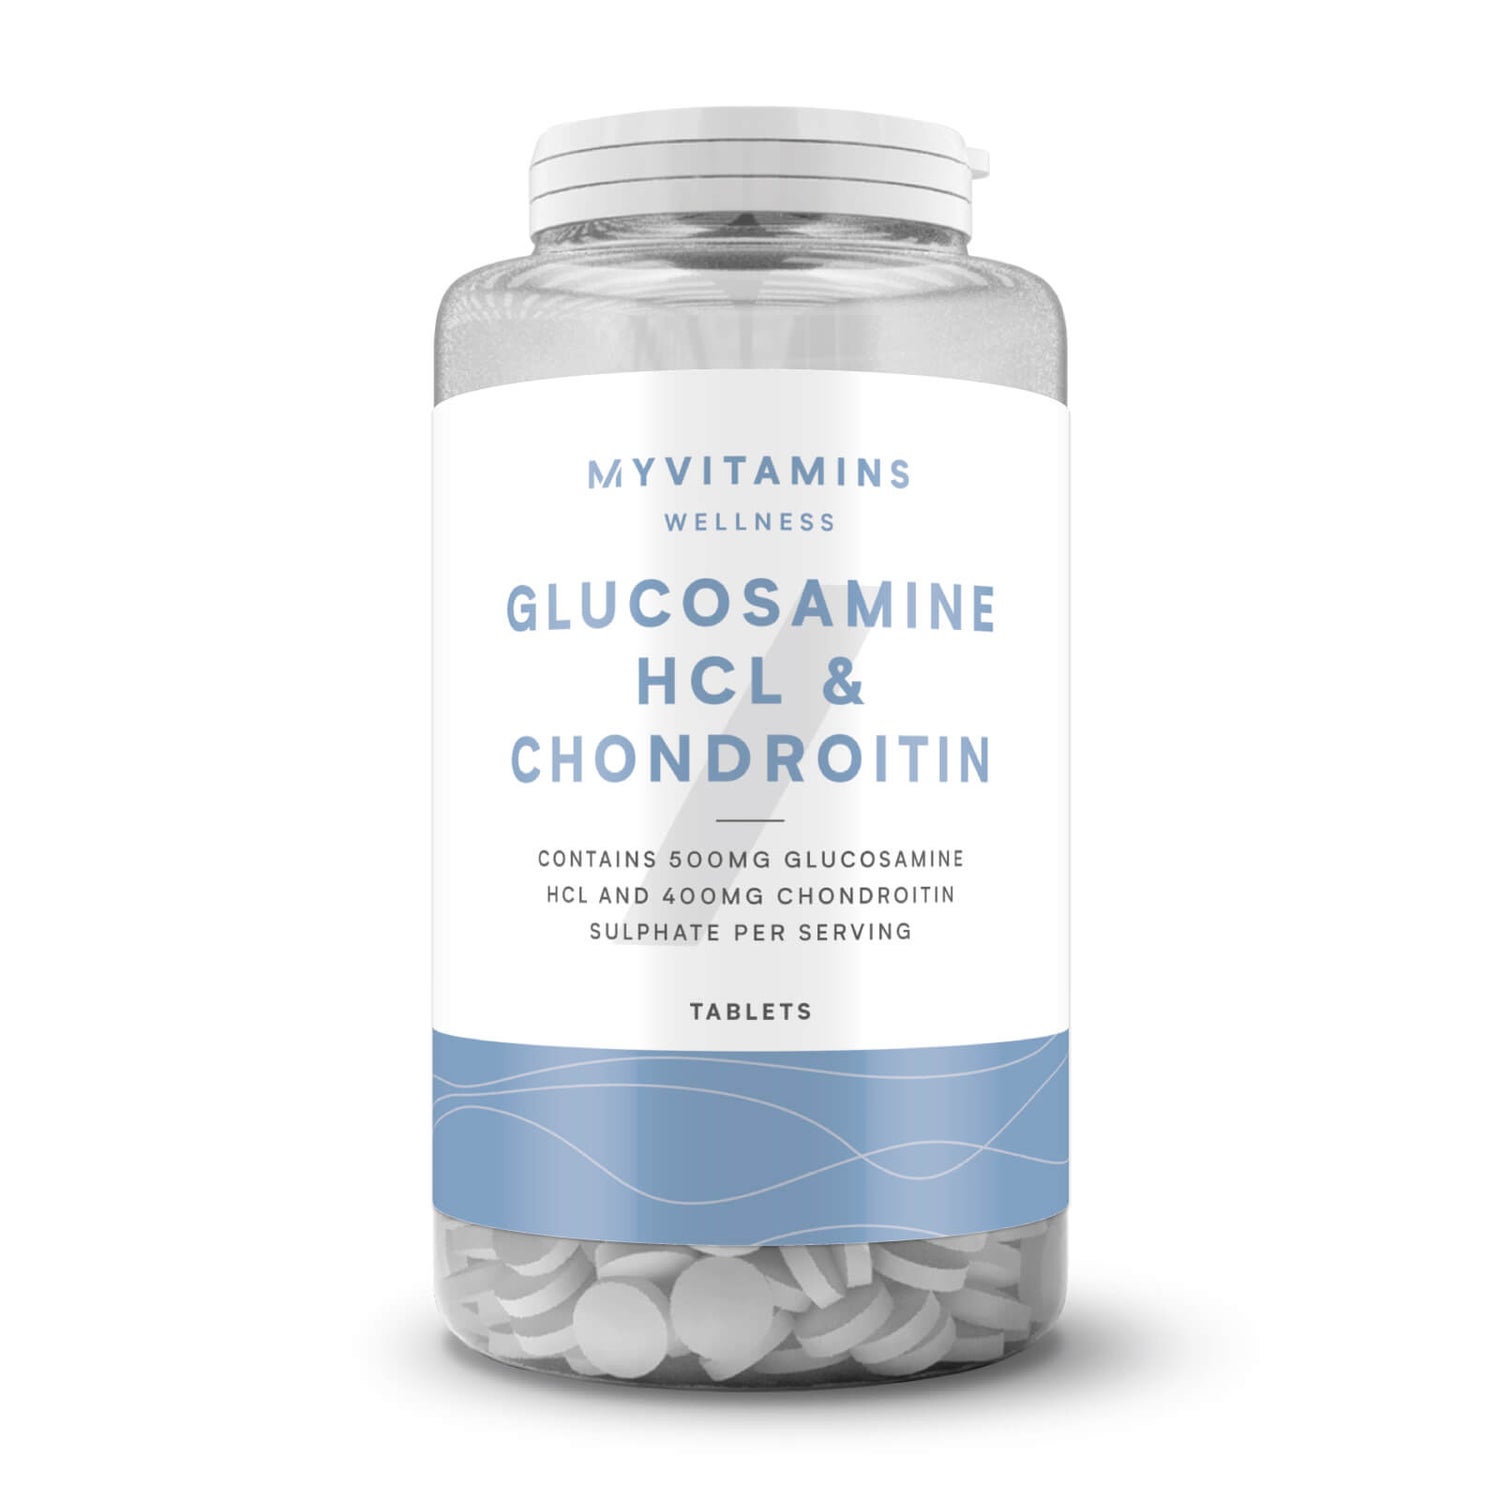 Glucosamine HCL & Chondroitin Tabletten - 120tabletten